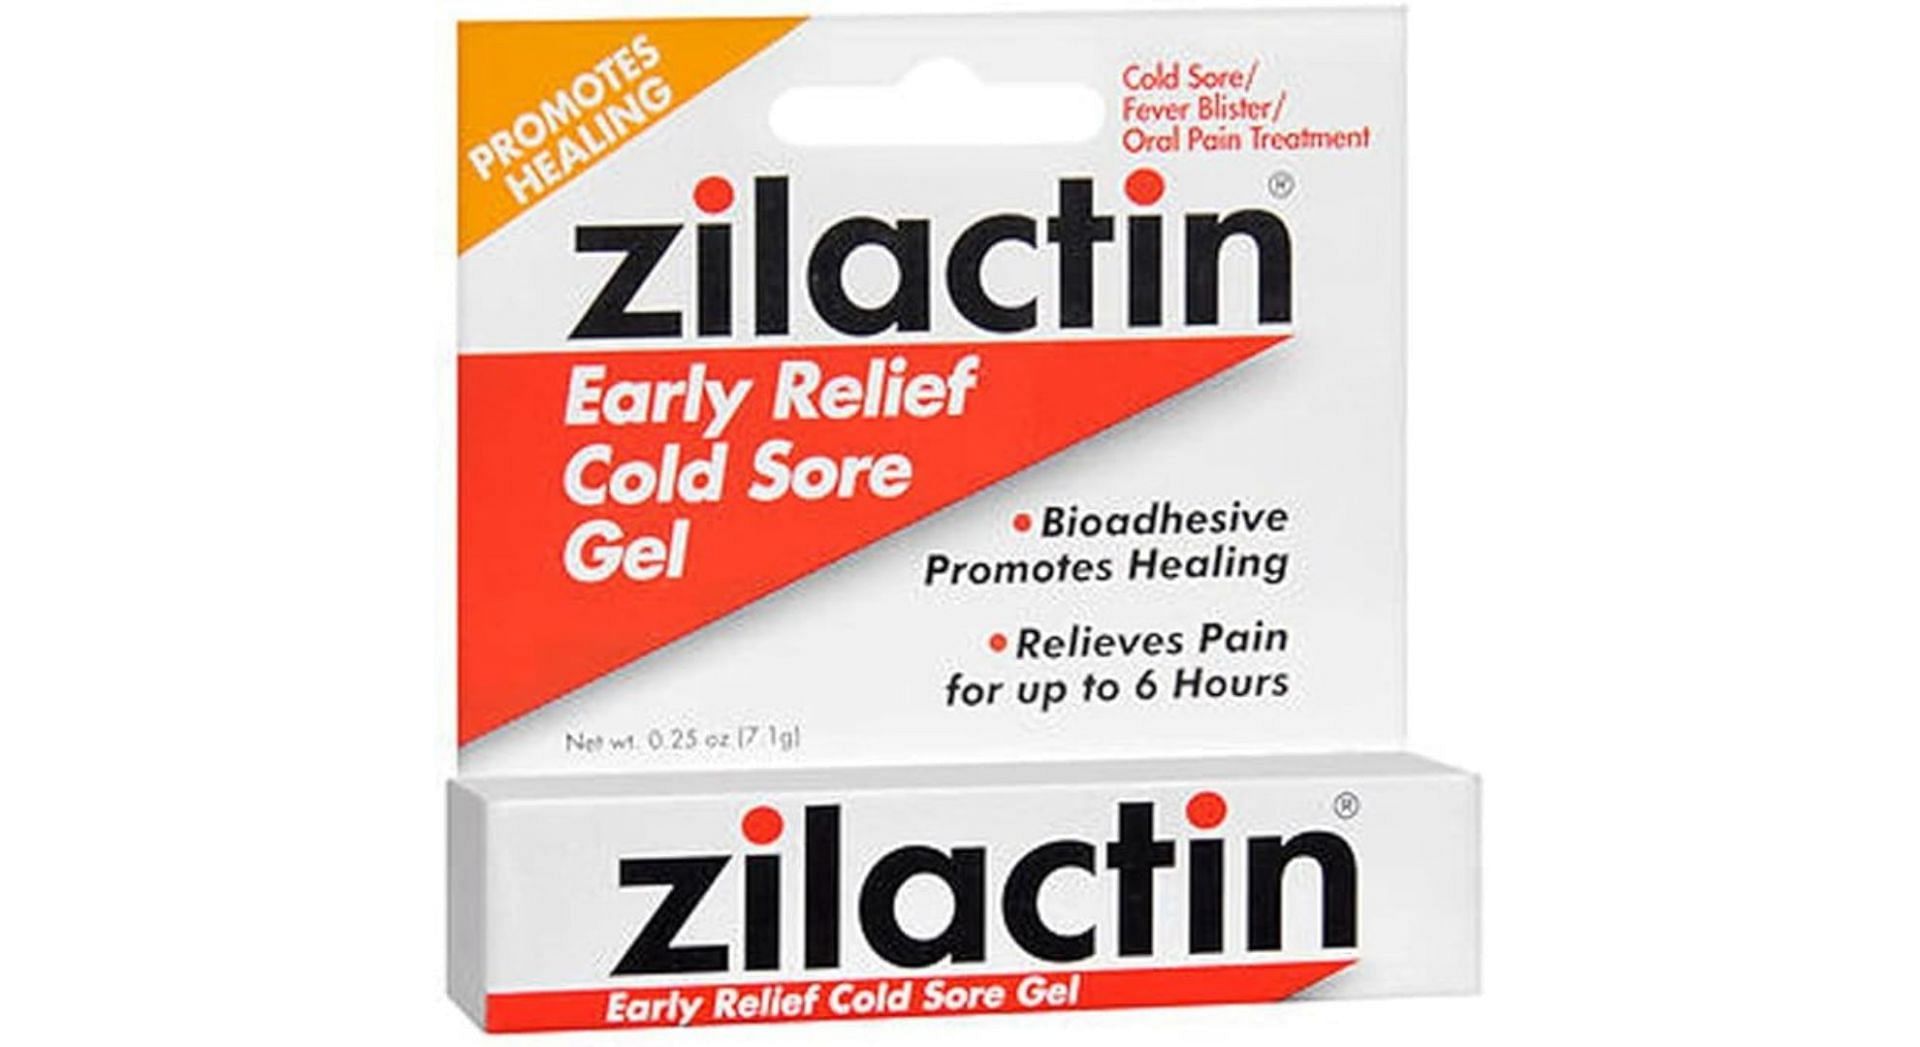 Zilactin Cold Sore Gel (Image via Amazon)